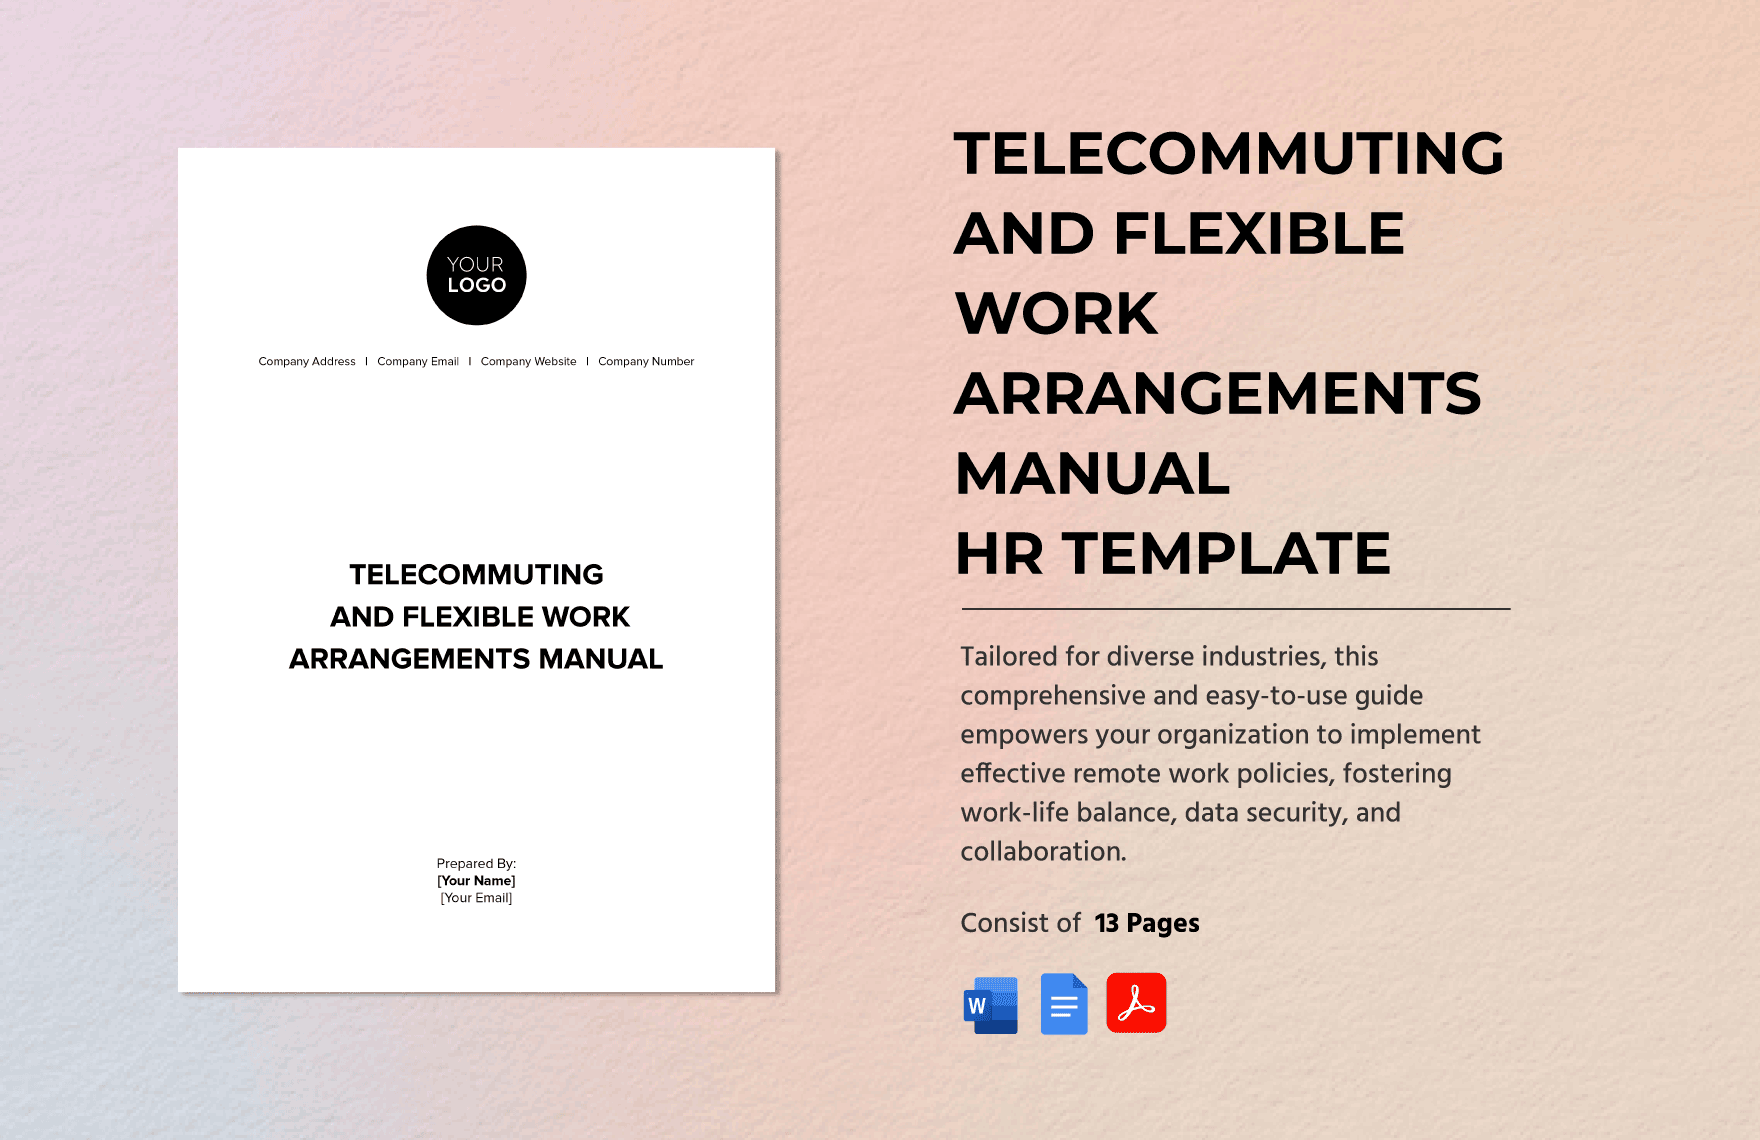  Telecommuting and Flexible Work Arrangements Manual HR Template